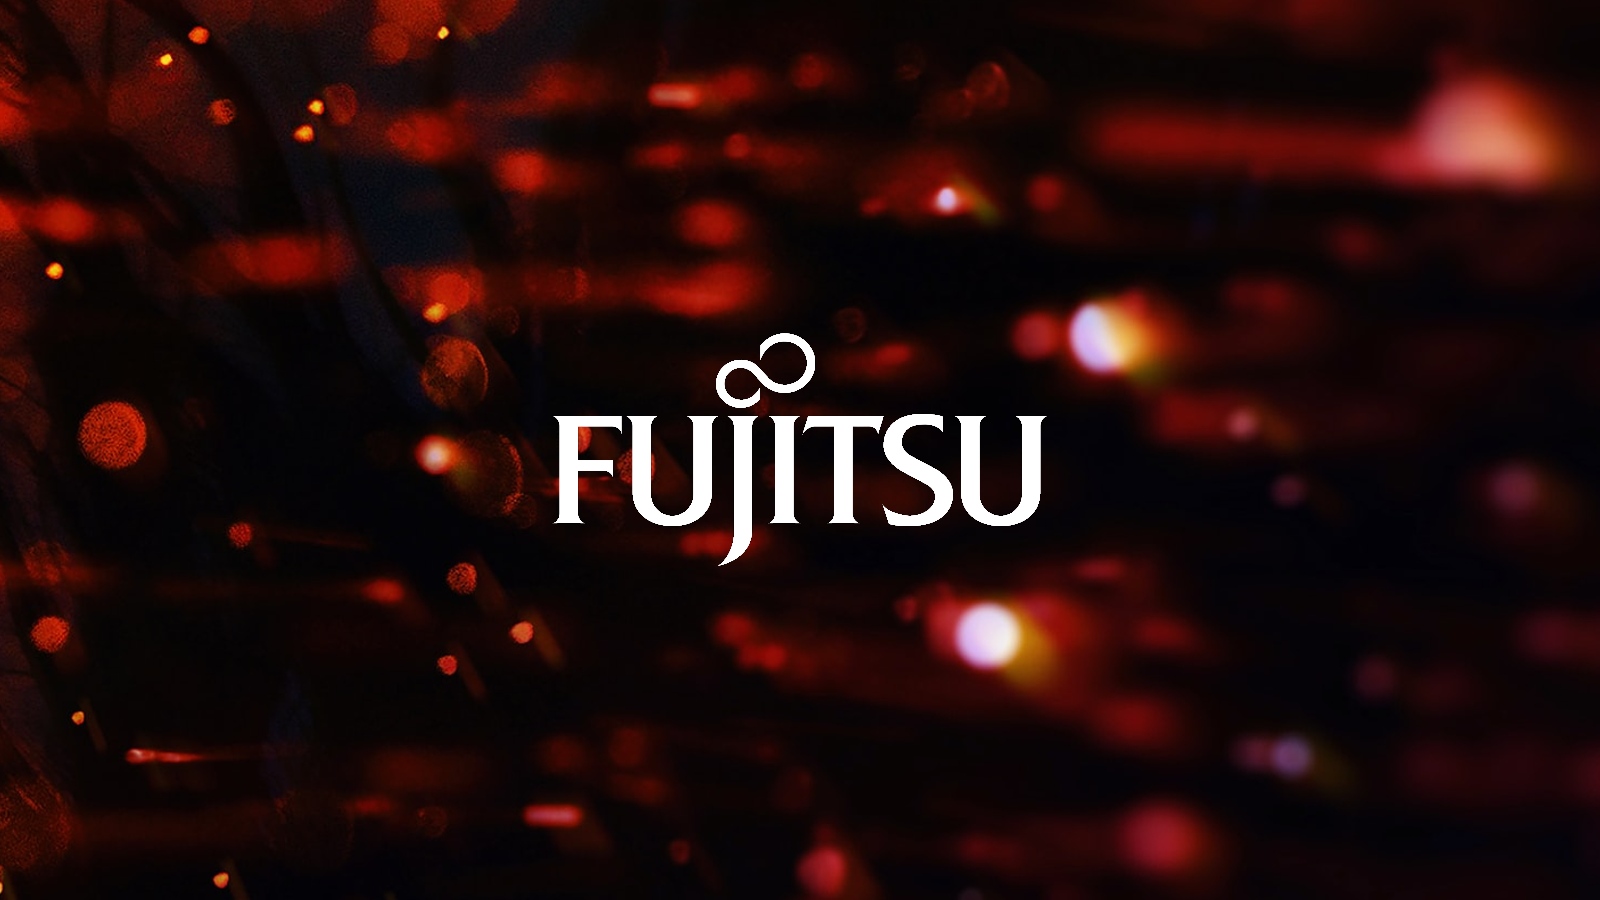 Fujitsu Wallpapers